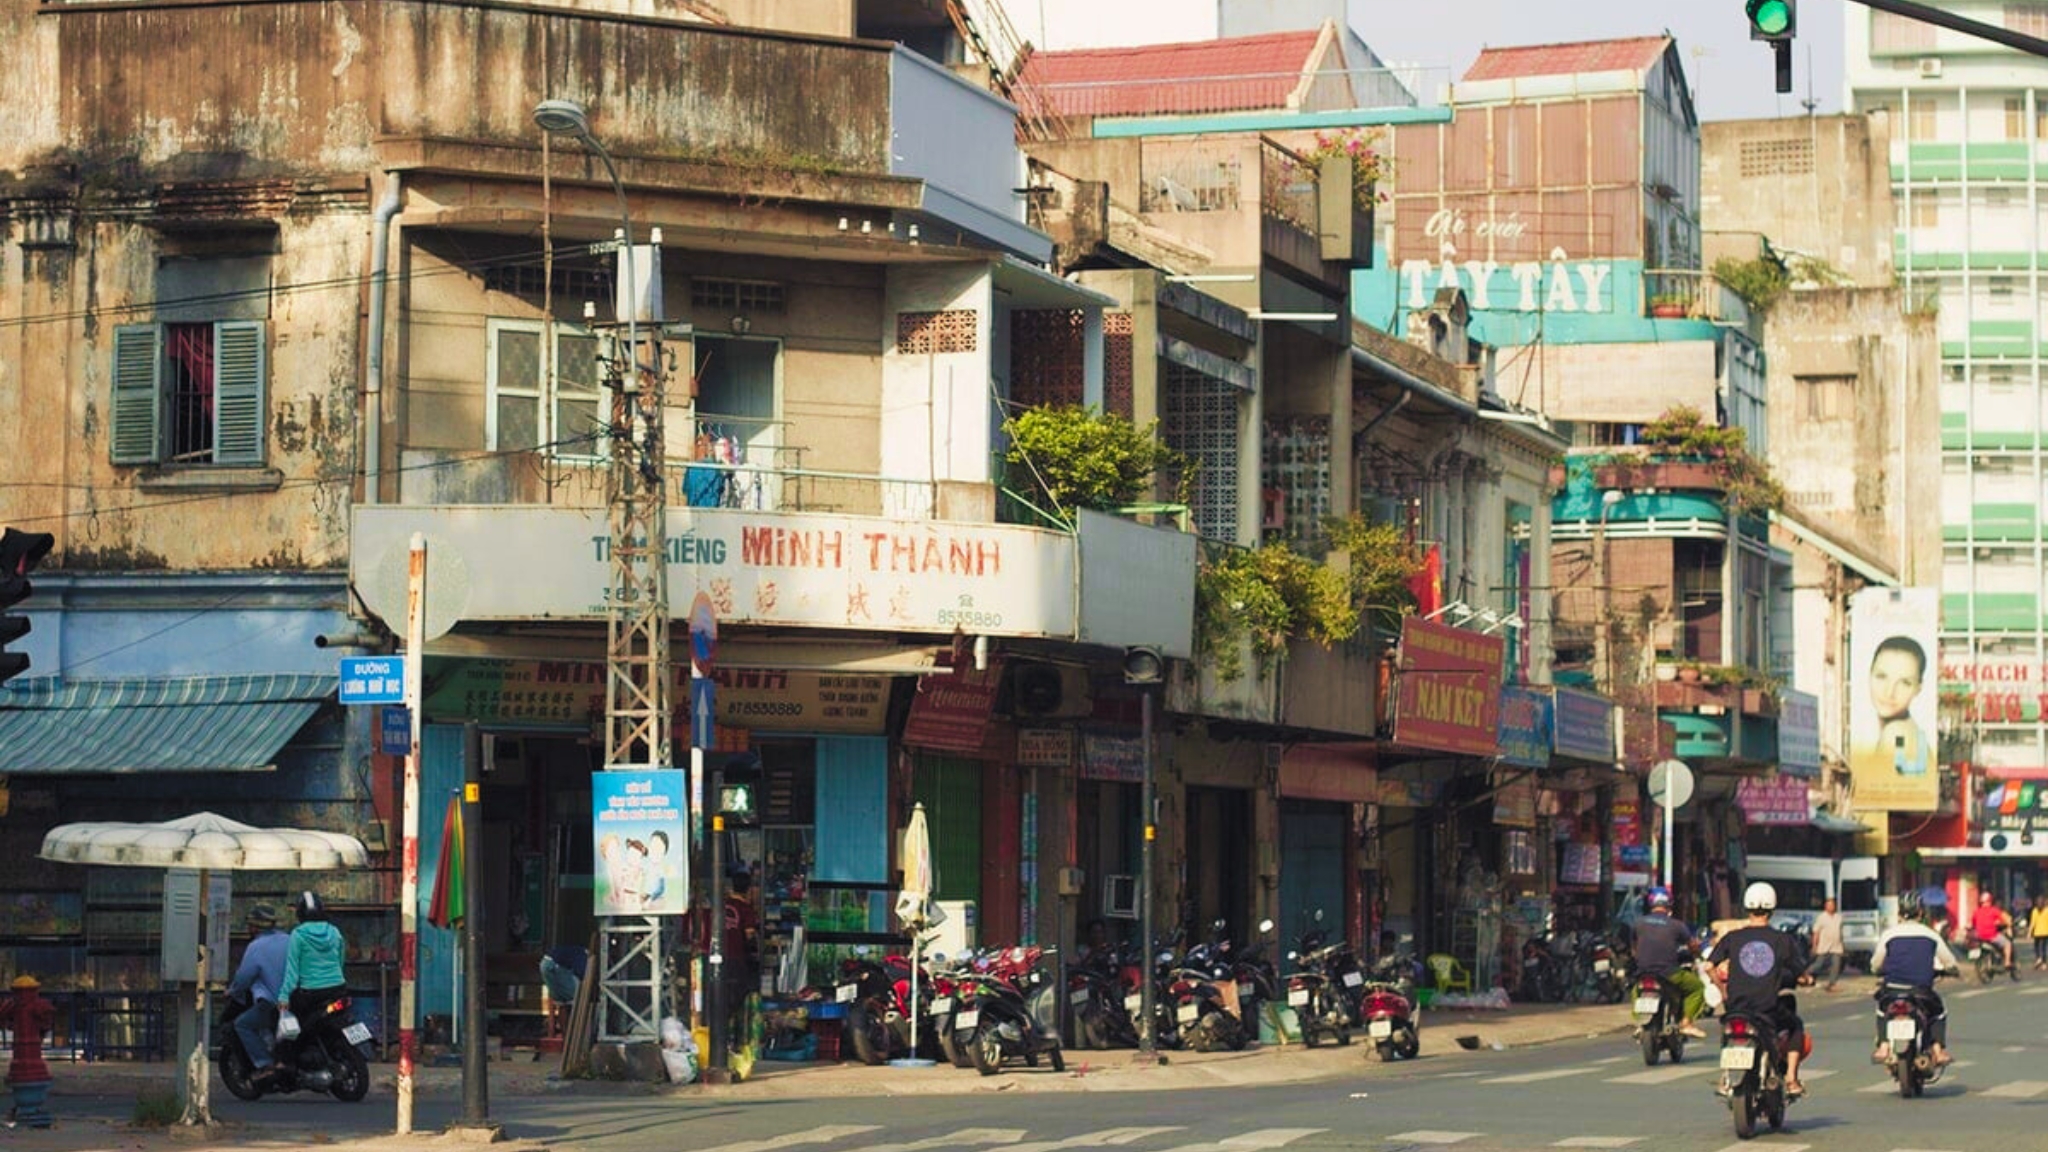 China Town Saigon